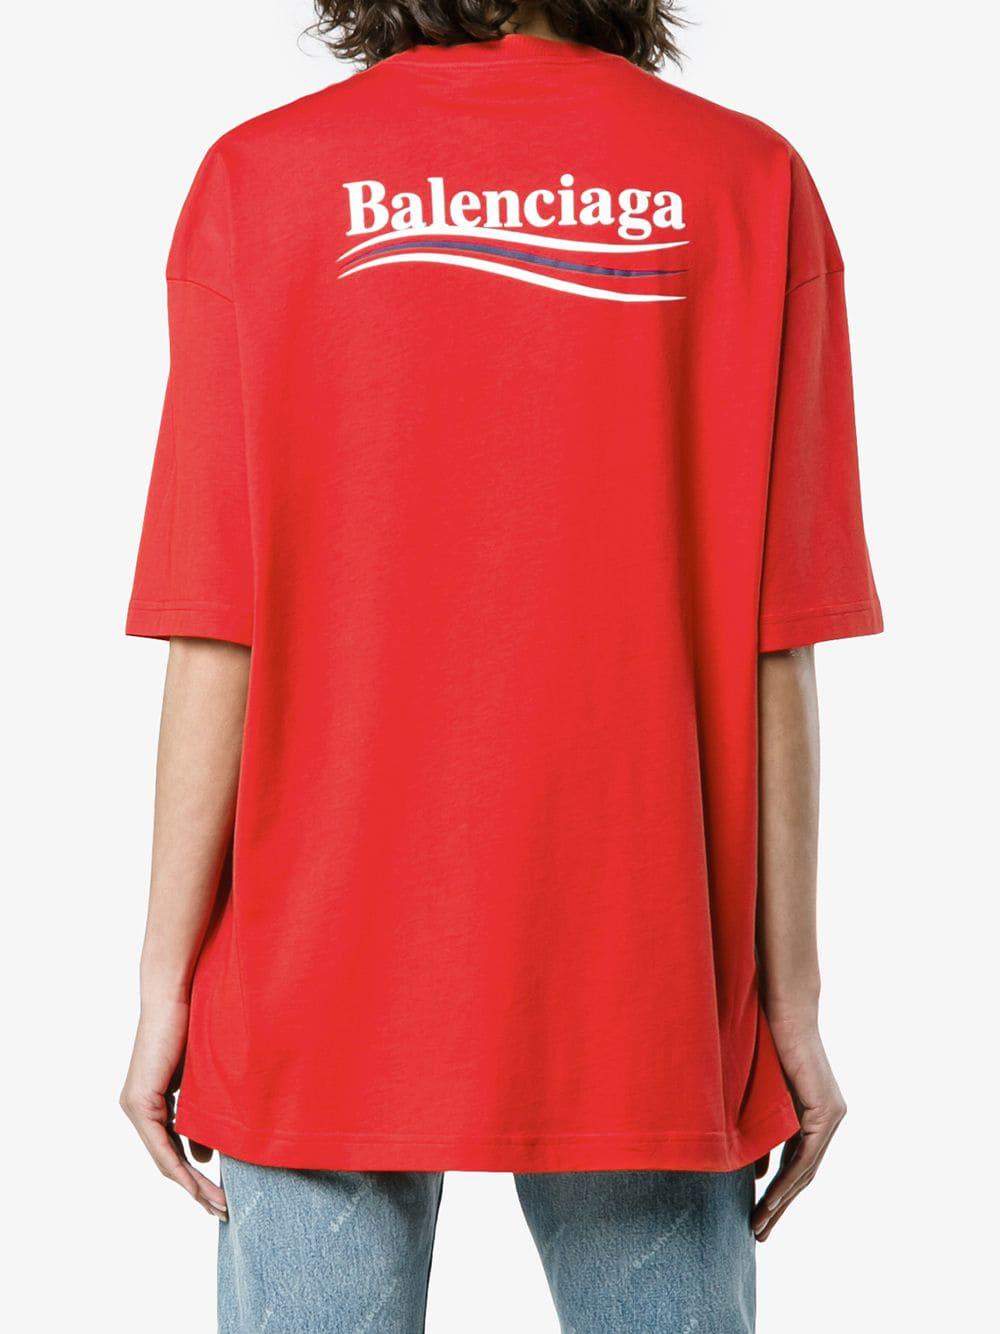 indre han Mursten Balenciaga Logo Print T-shirt in Red | Lyst